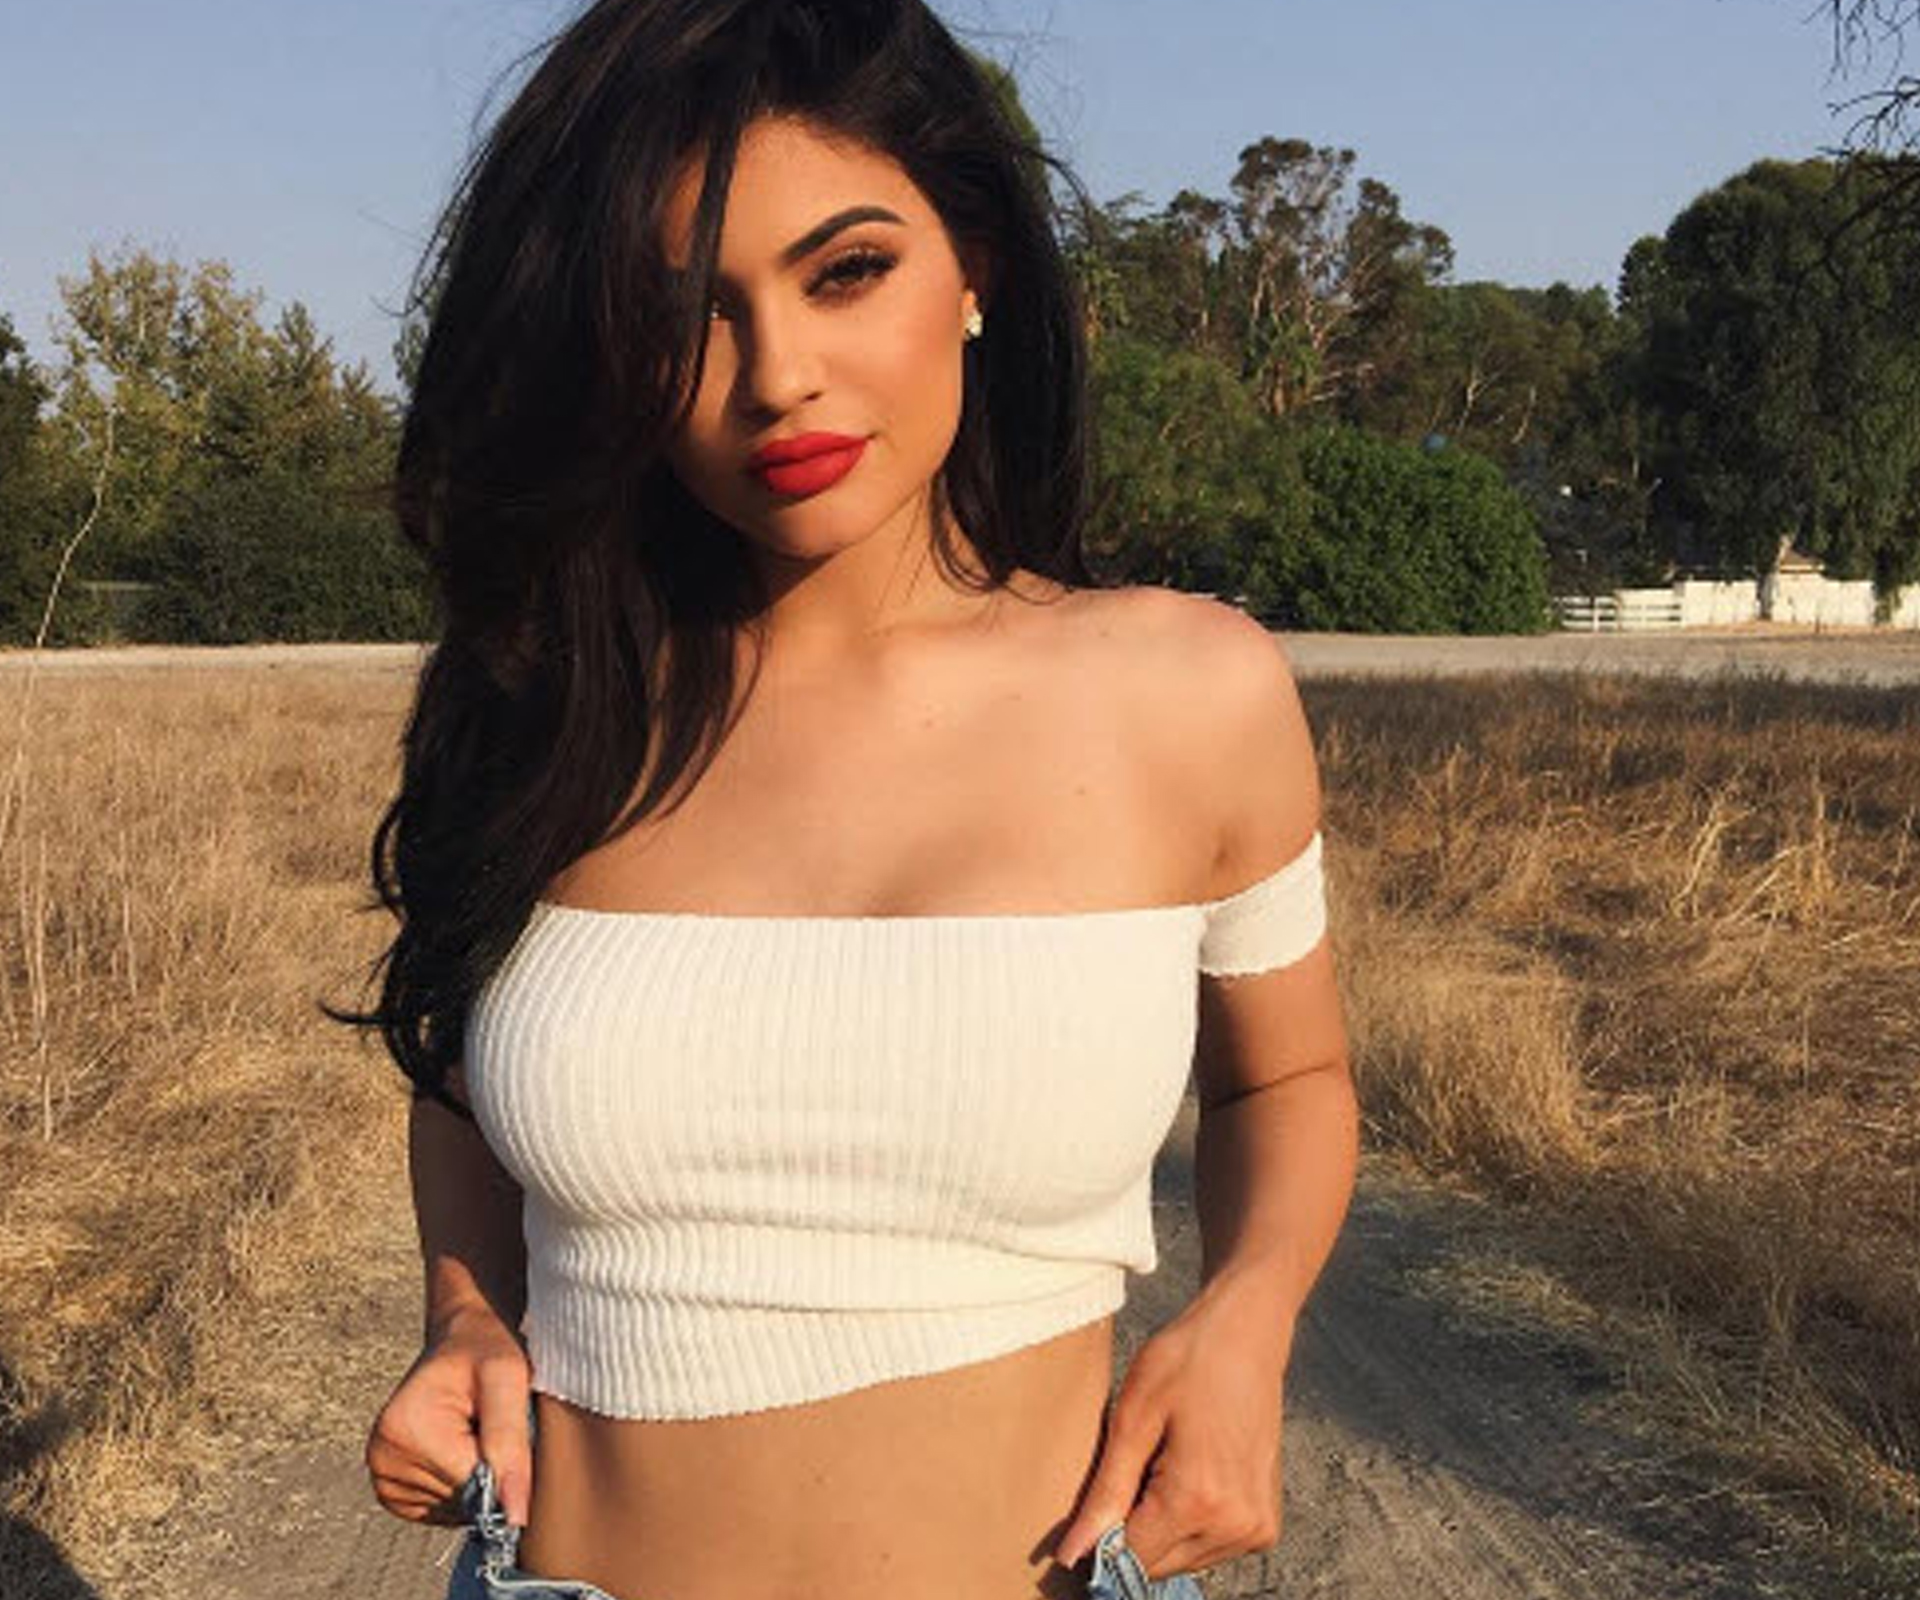 Did Kylie Jenner get a boob job?